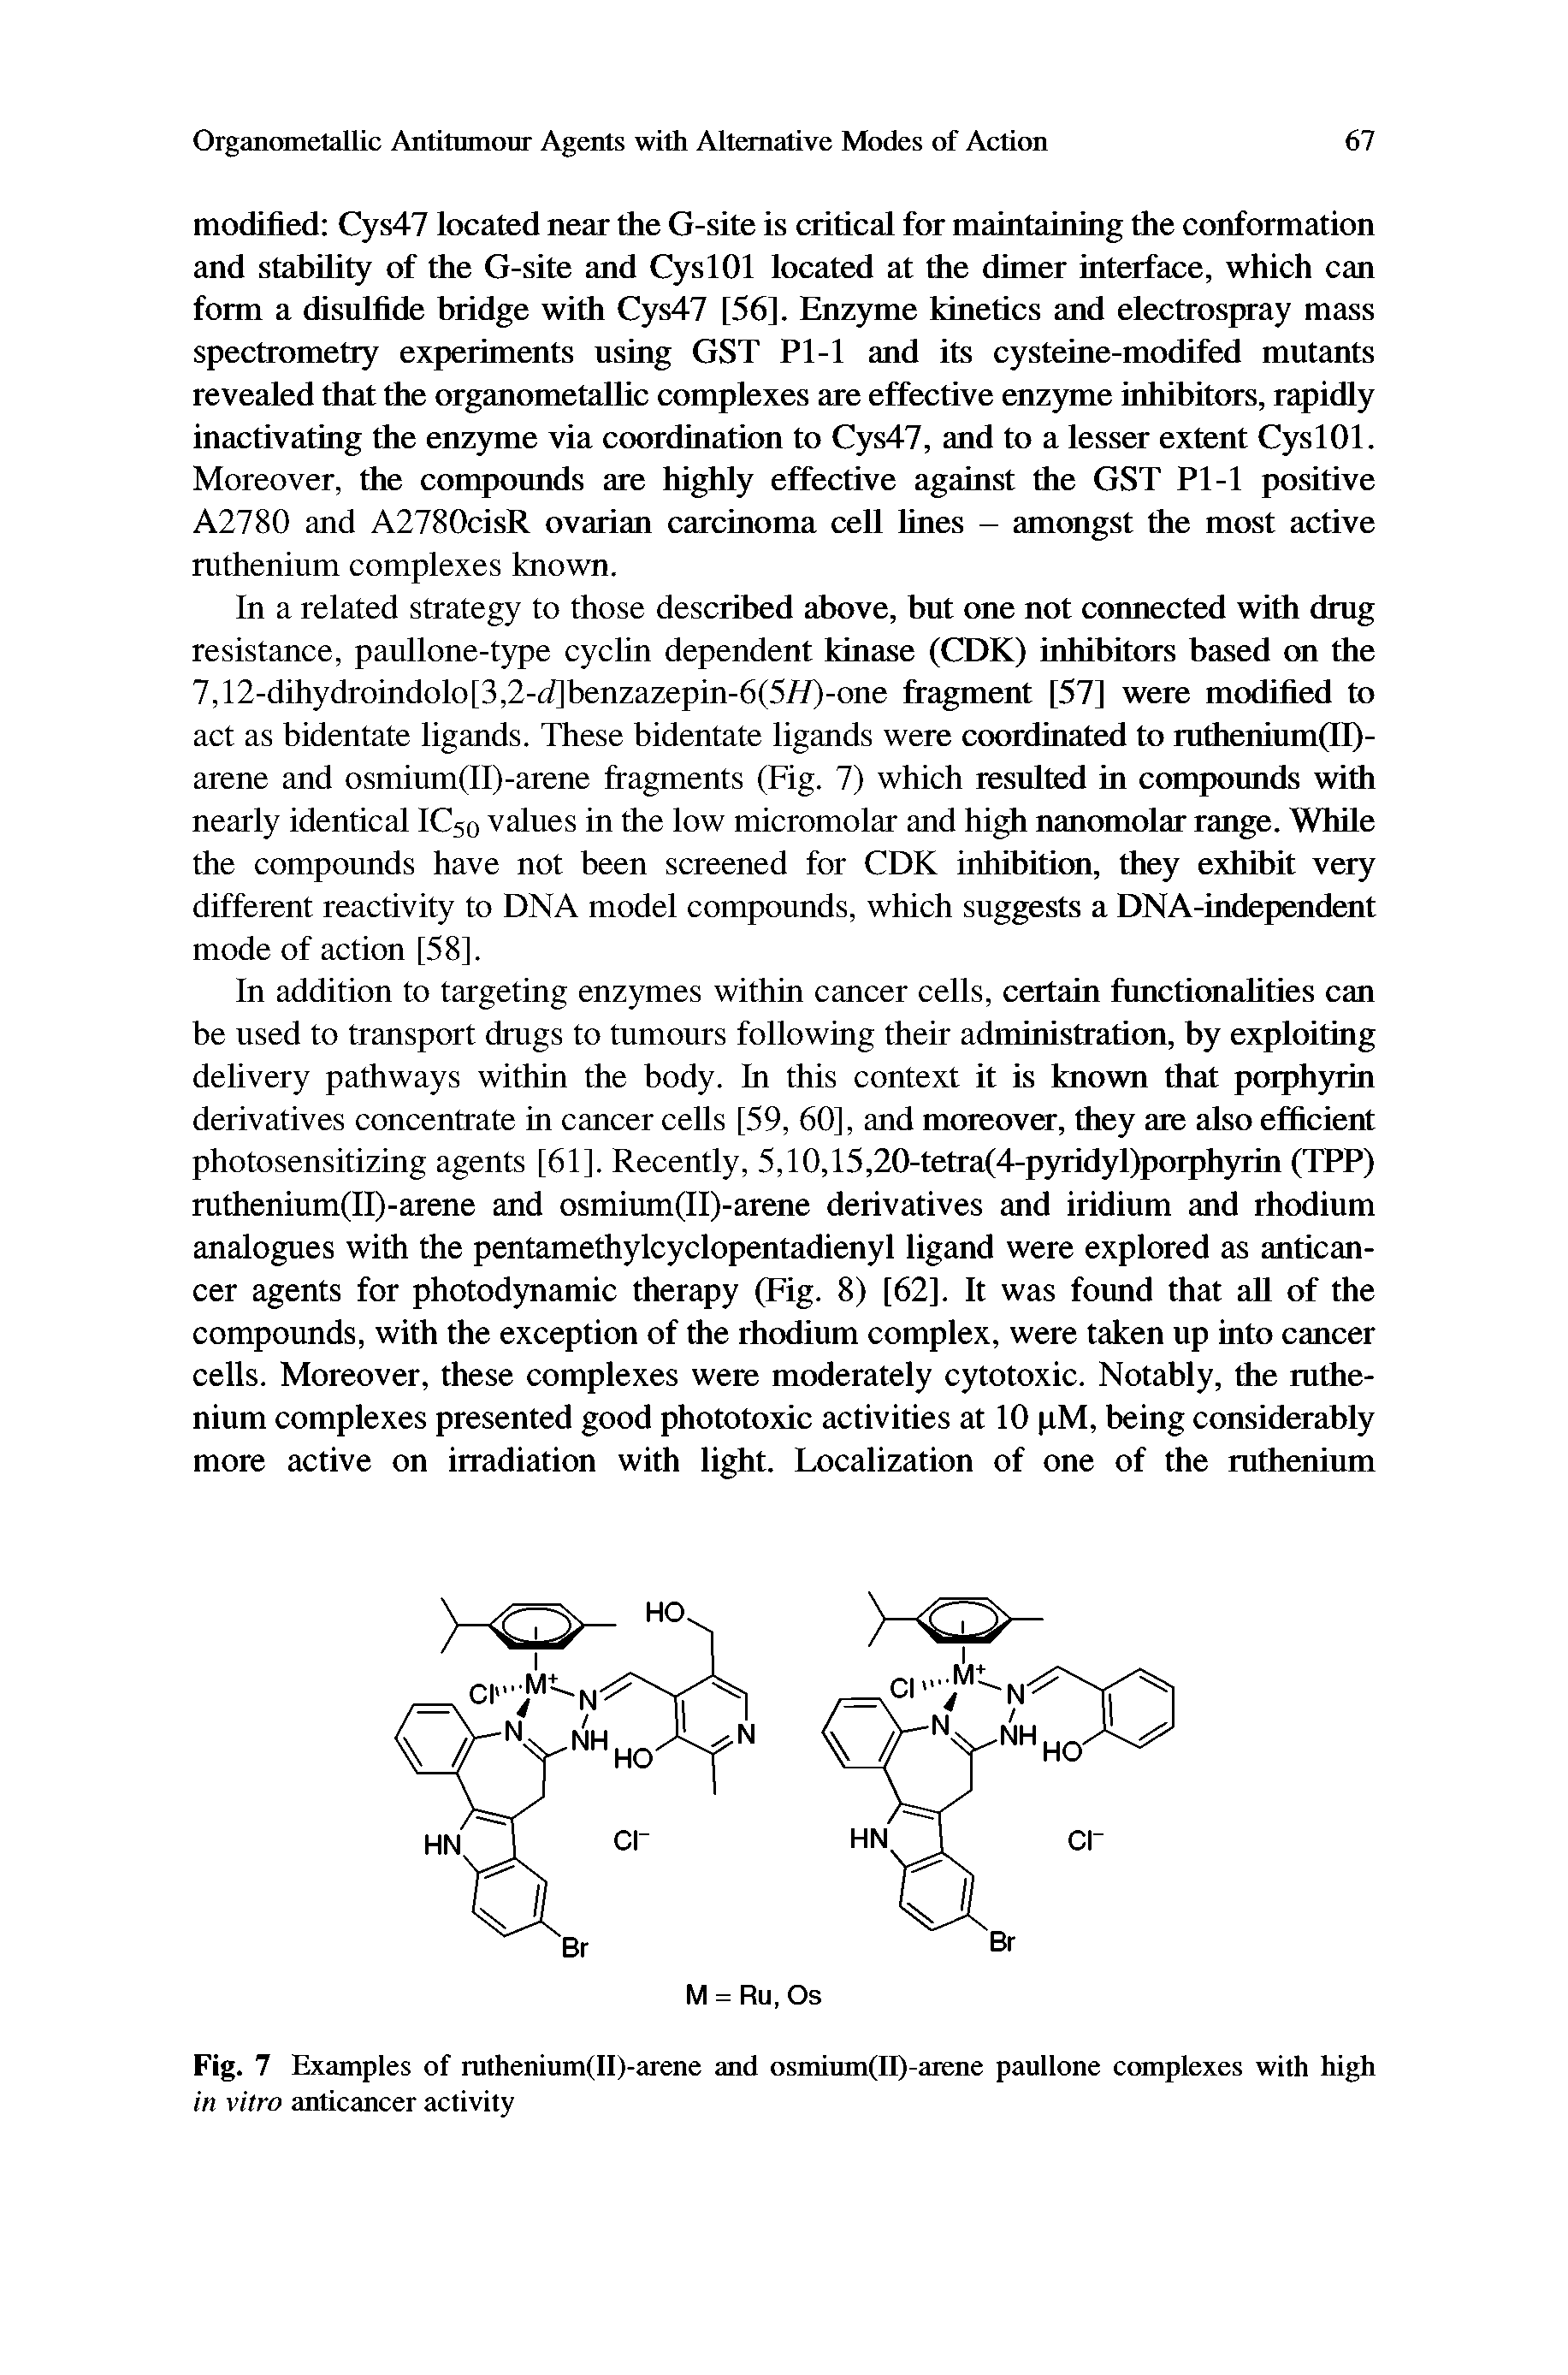 Fig. 7 Examples of ruthenium(II)-arene and osmium(II)-arene paullone complexes with high in vitro anticancer activity...